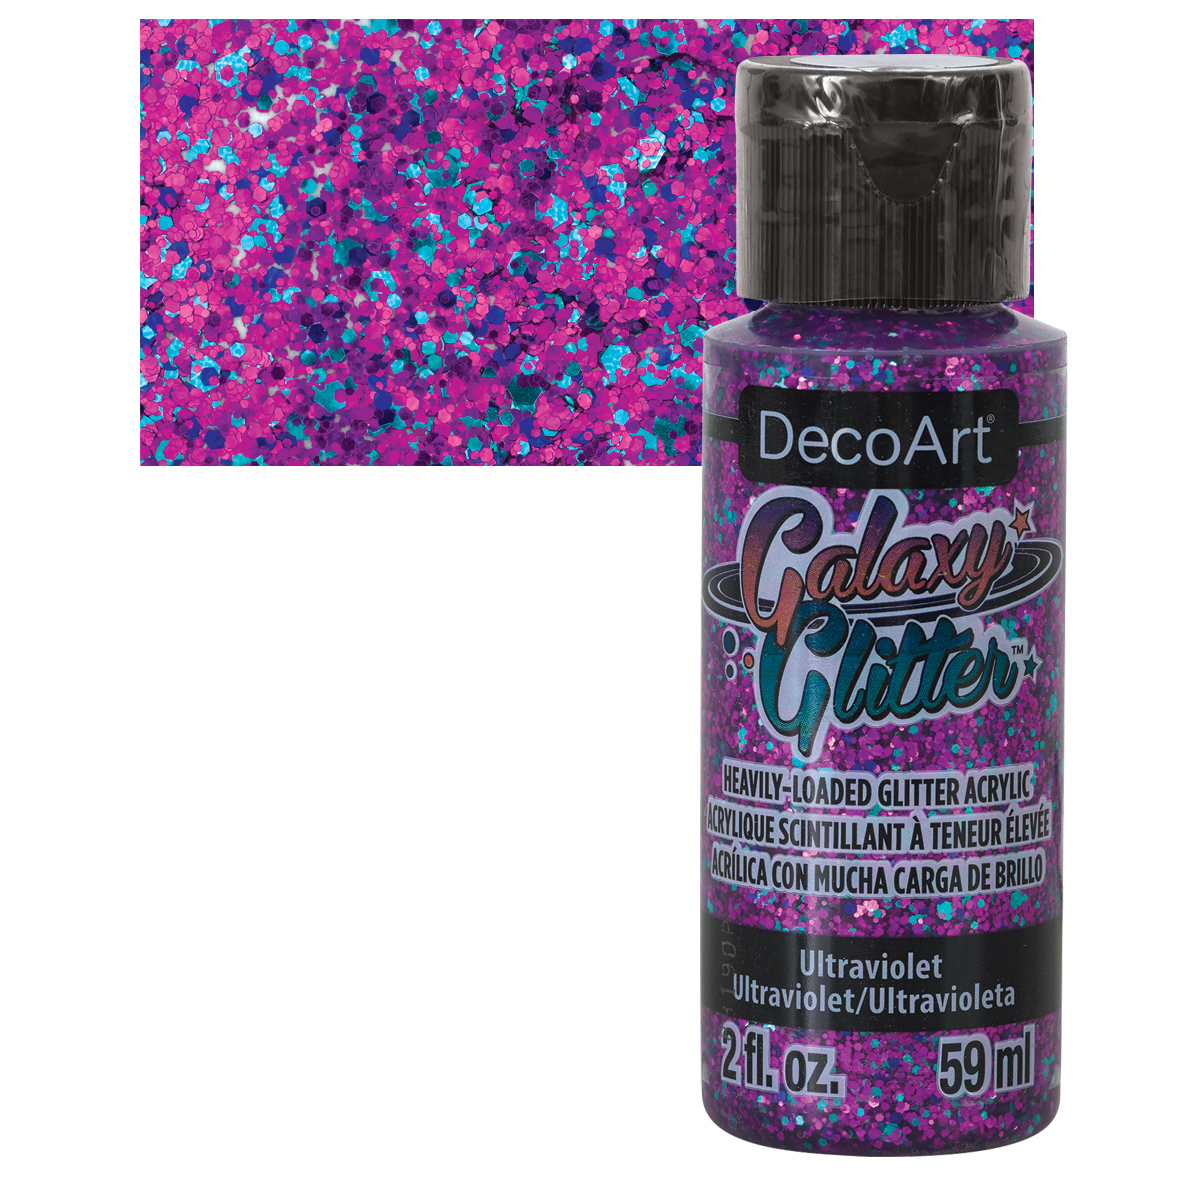 DecoArt Galaxy Glitter Acrylic Paints